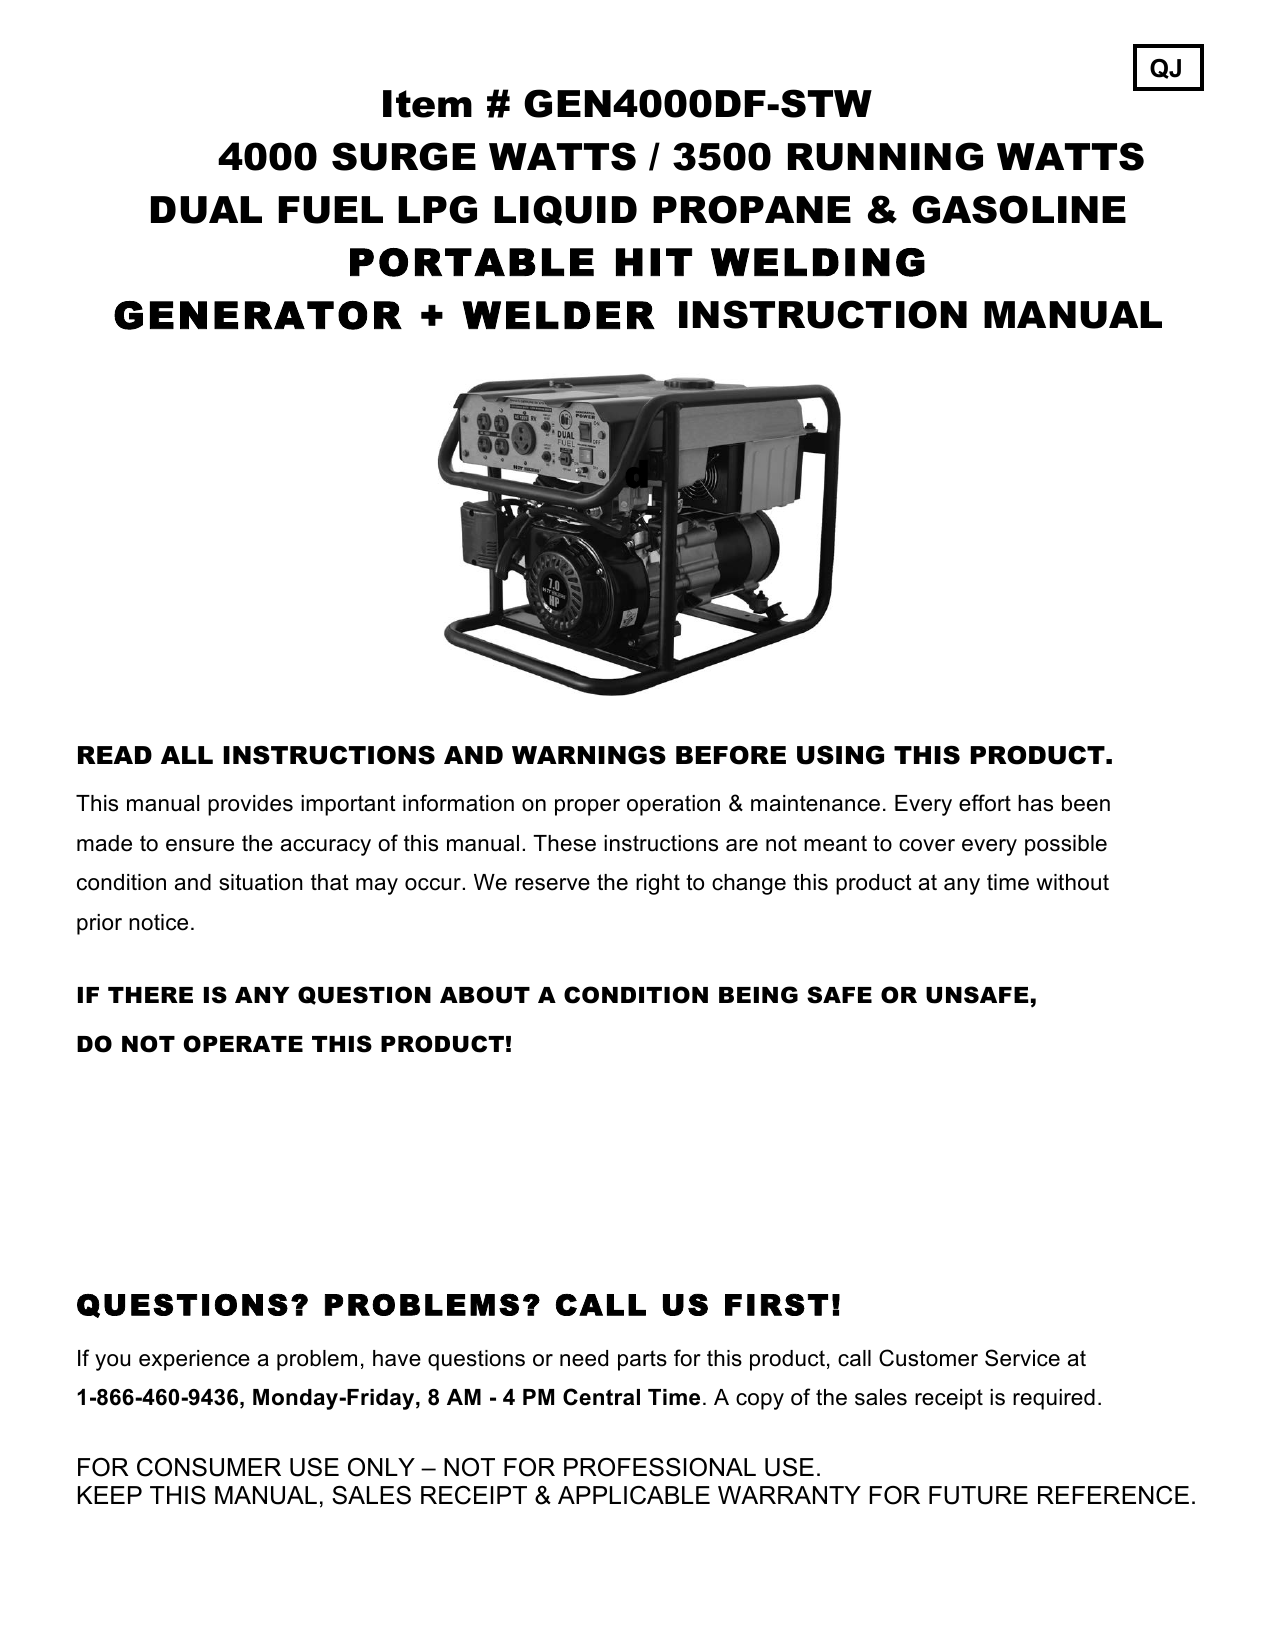 Hit Welding Gen4000df Stw User Manual Manualzz